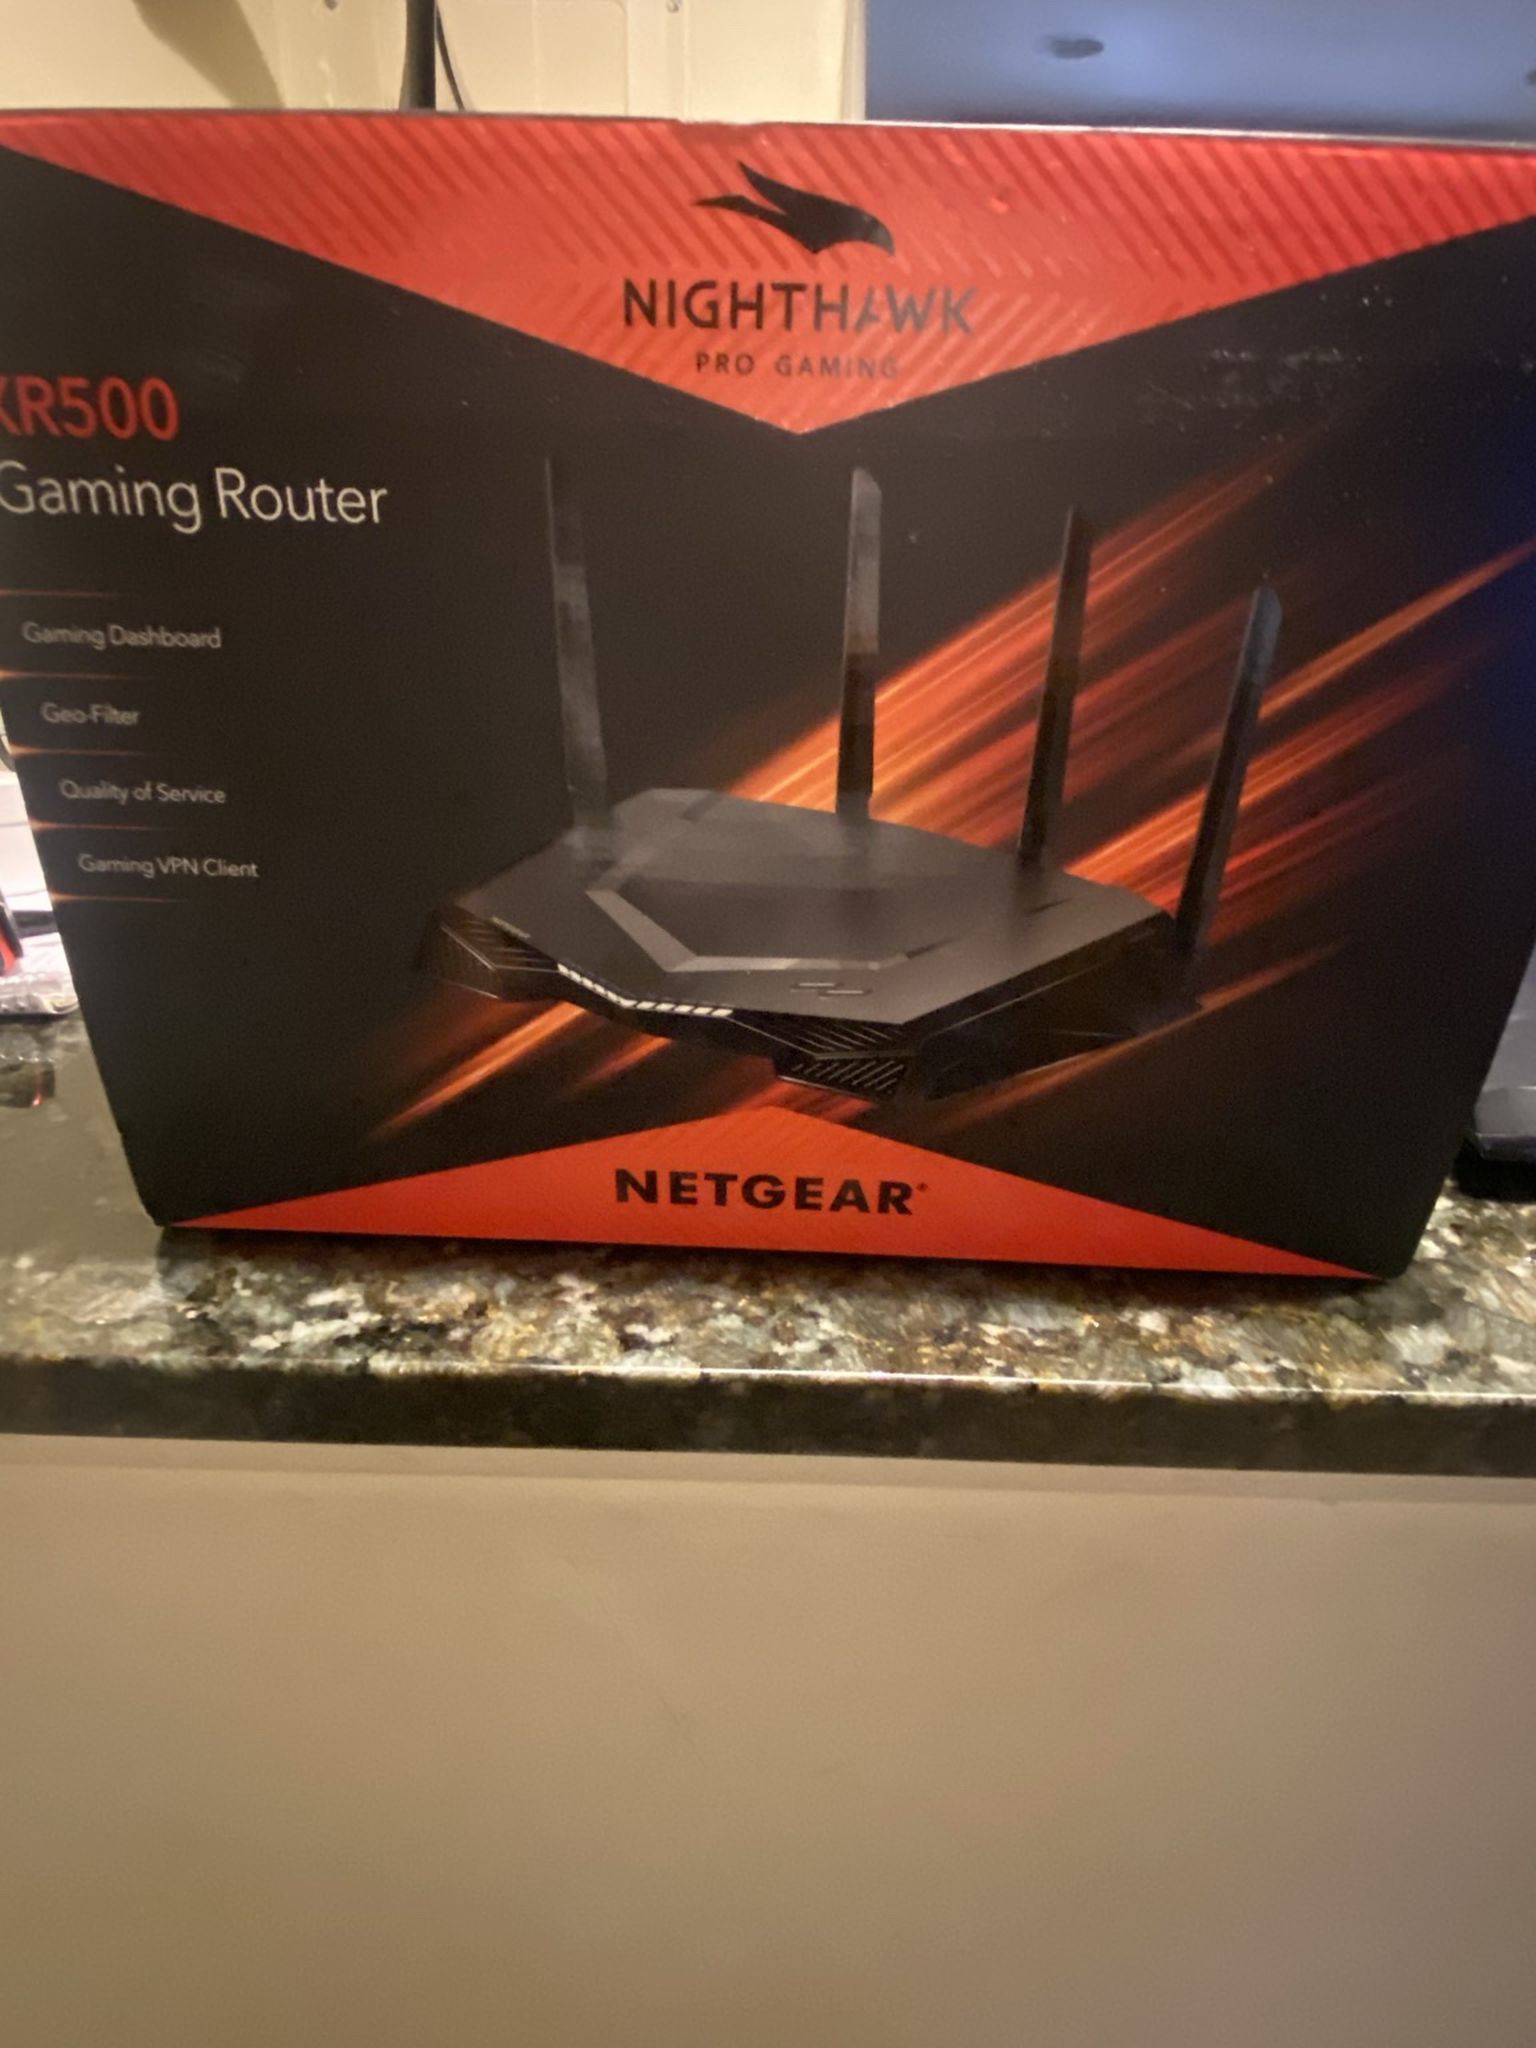 NetGear Nighthawk Pro Gaming Xr500 Router